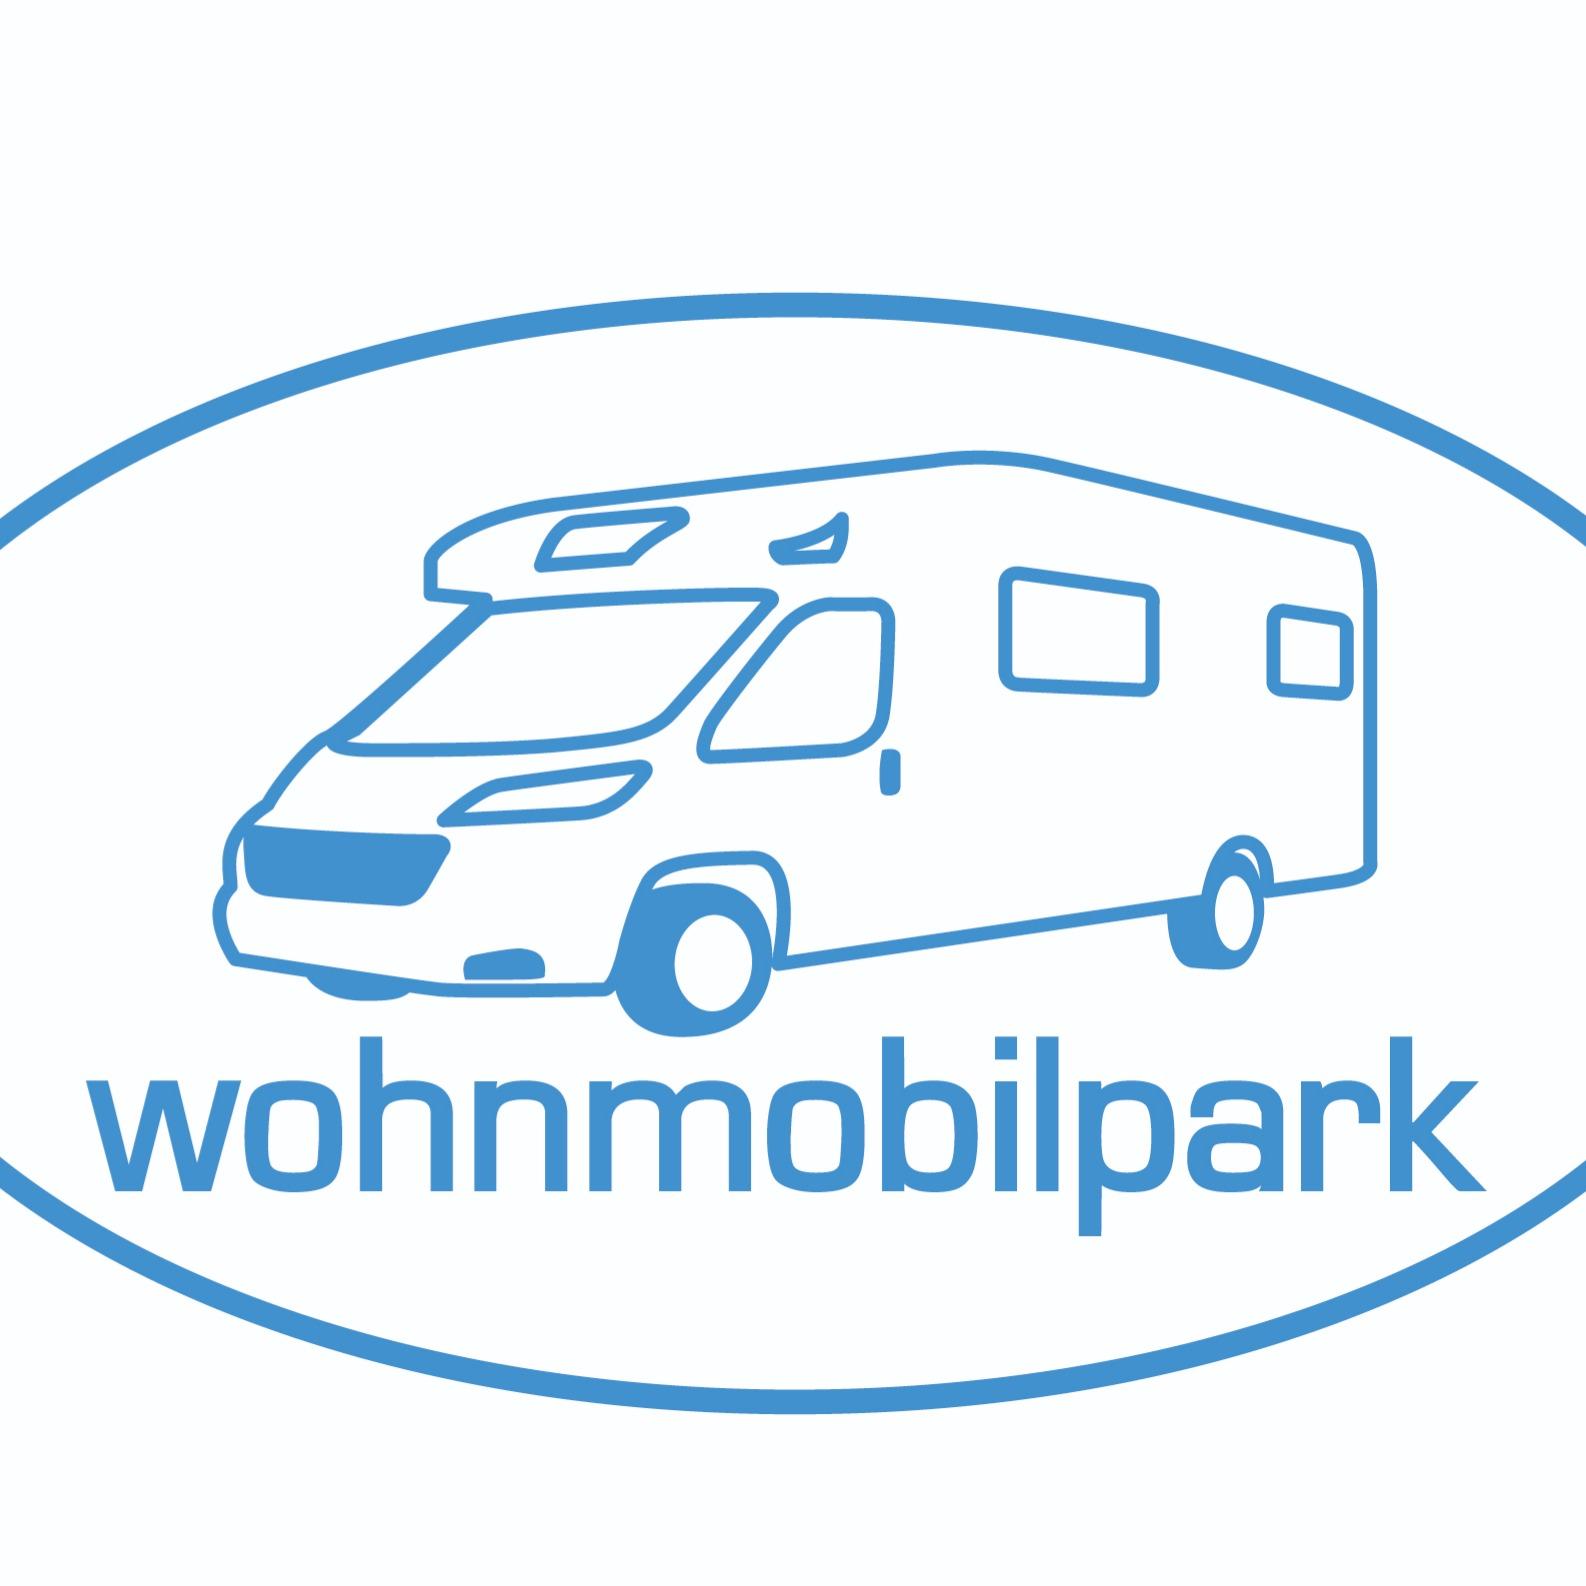 Wohnmobilpark GmbH in Bad Honnef - Logo